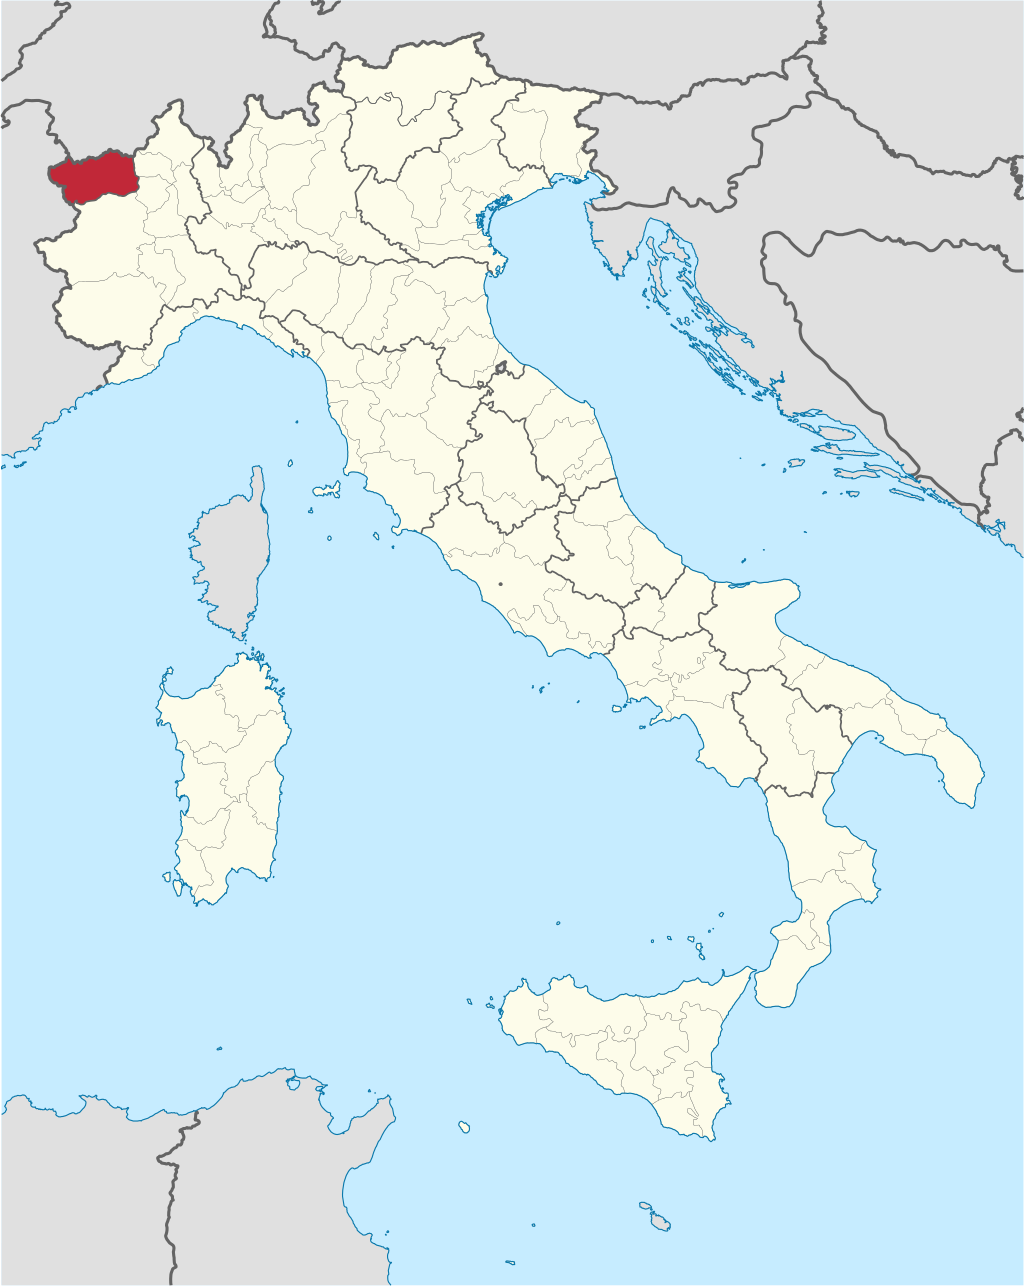 Battaglione Thermes Urbex location or around the region Val D'aosta (Aosta Valley), Italy